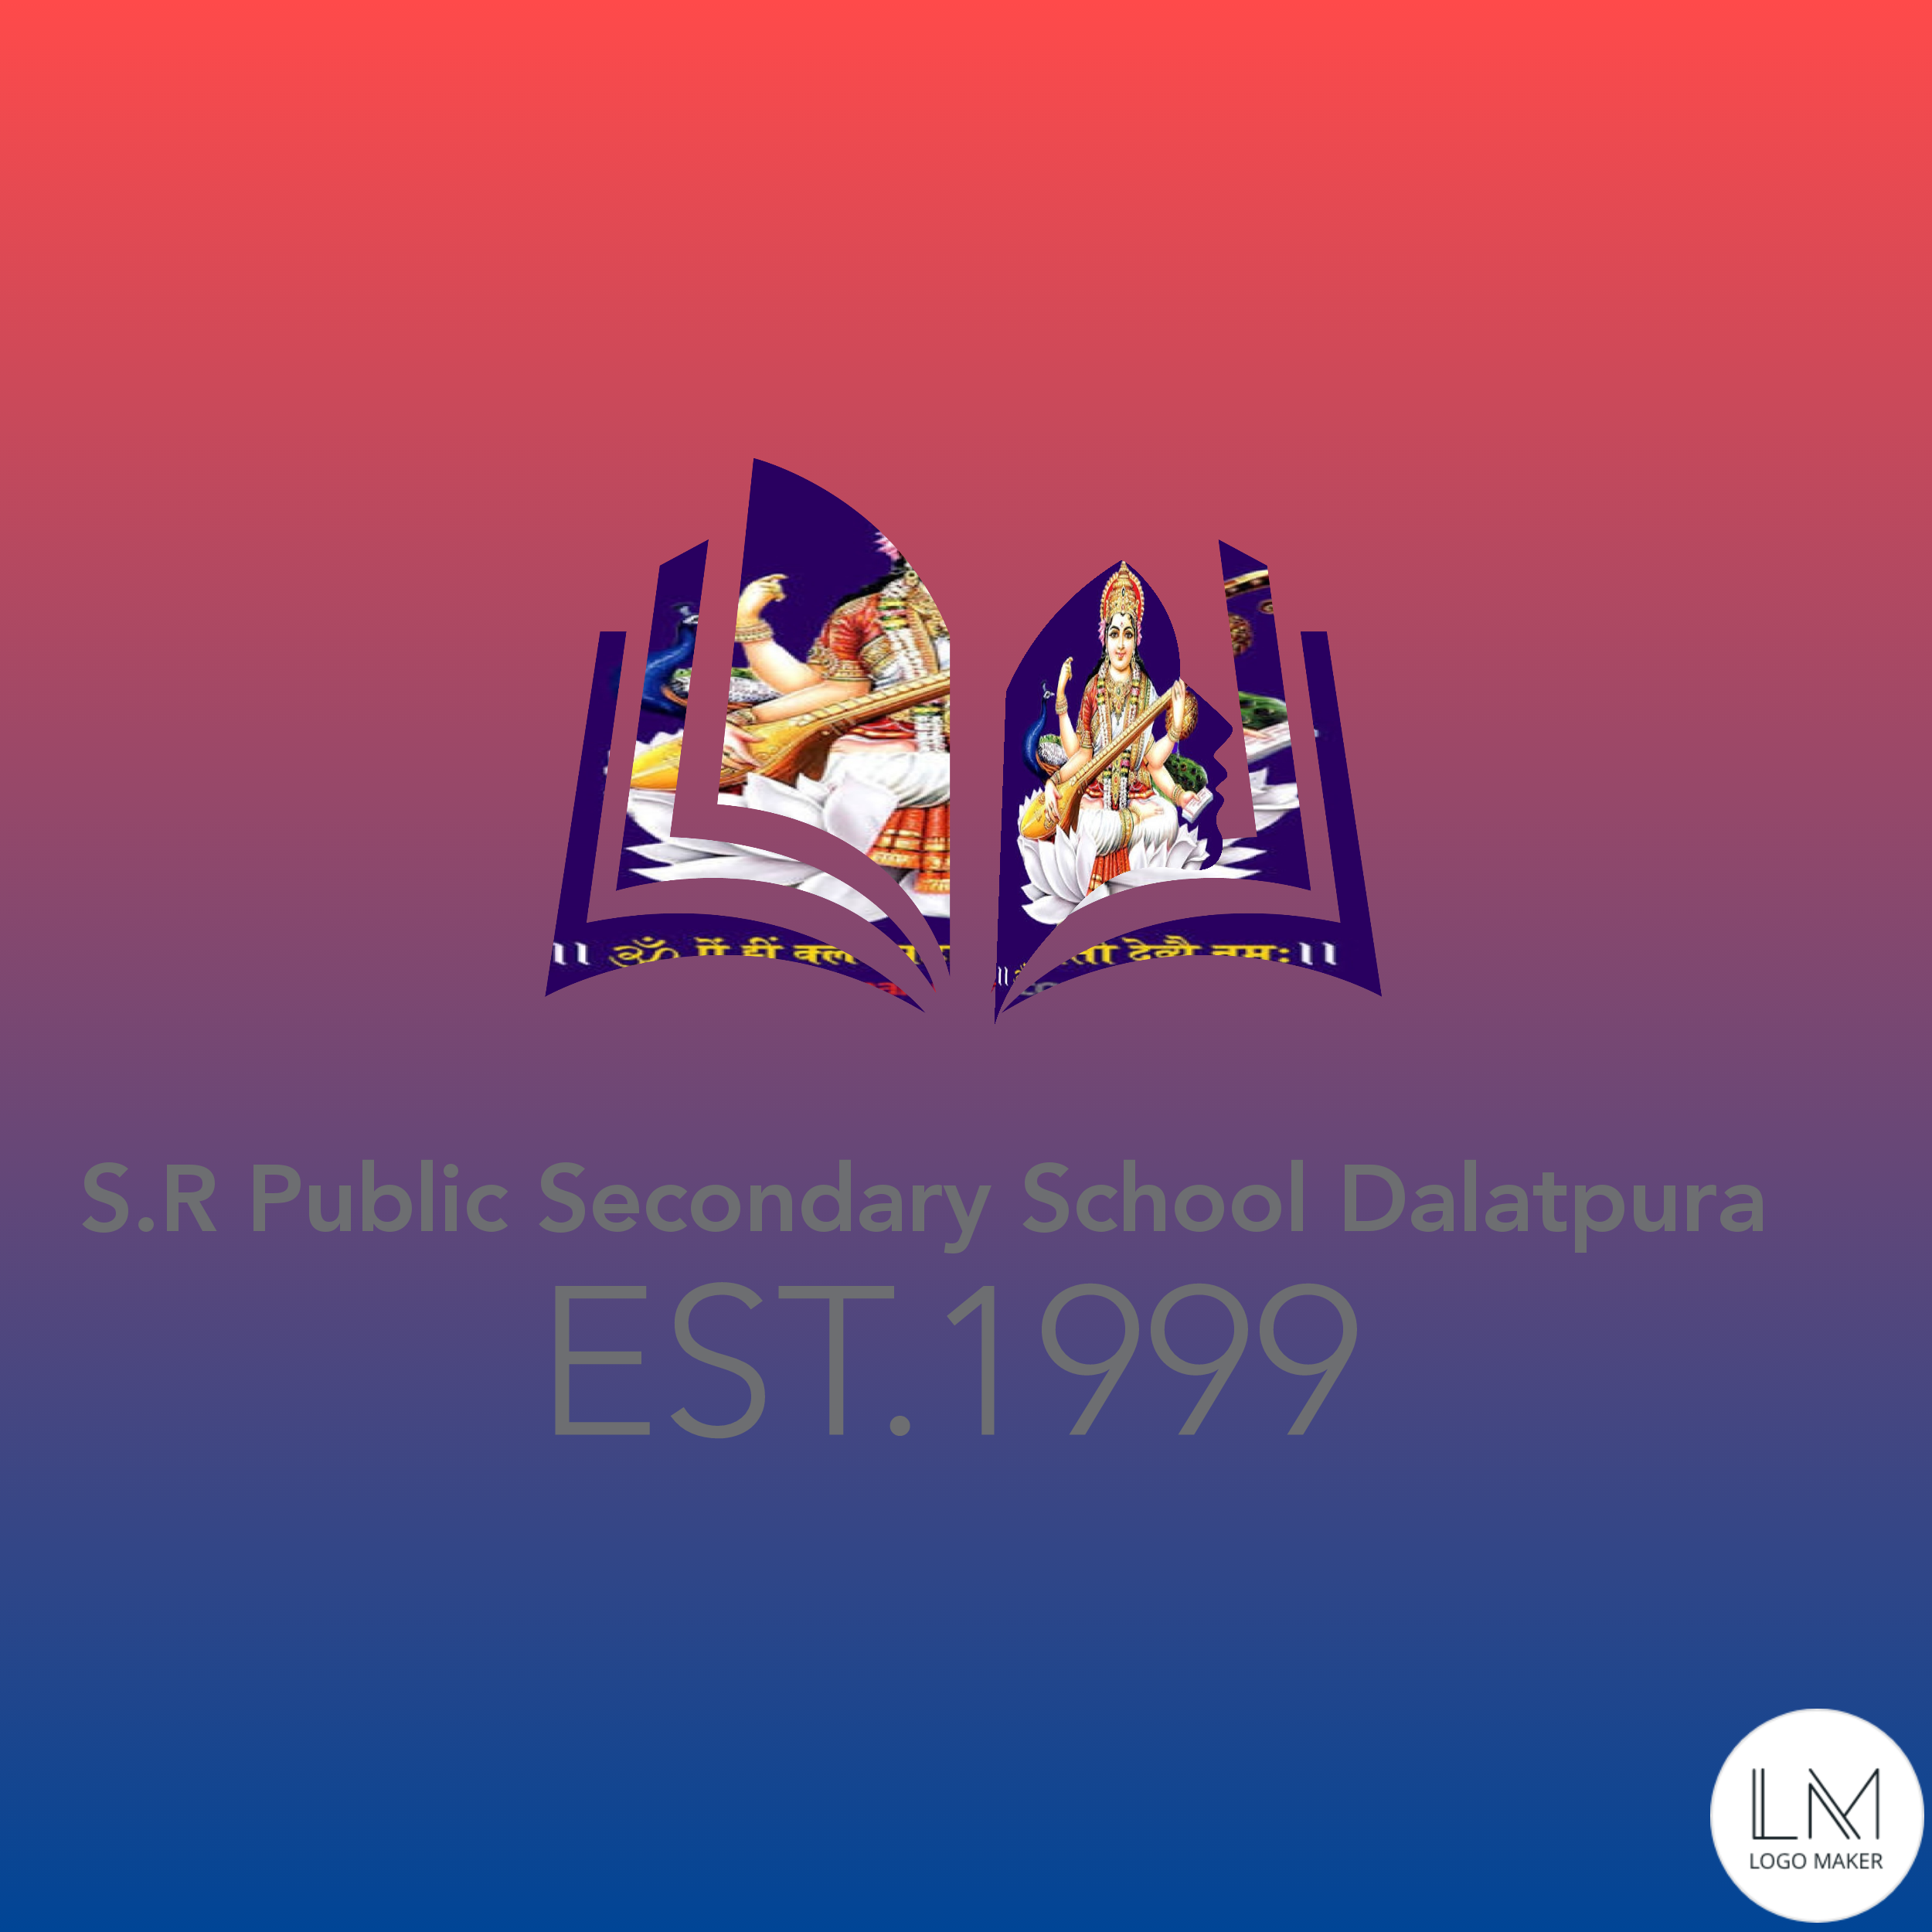 S.R Public Secondary School Dalatpura